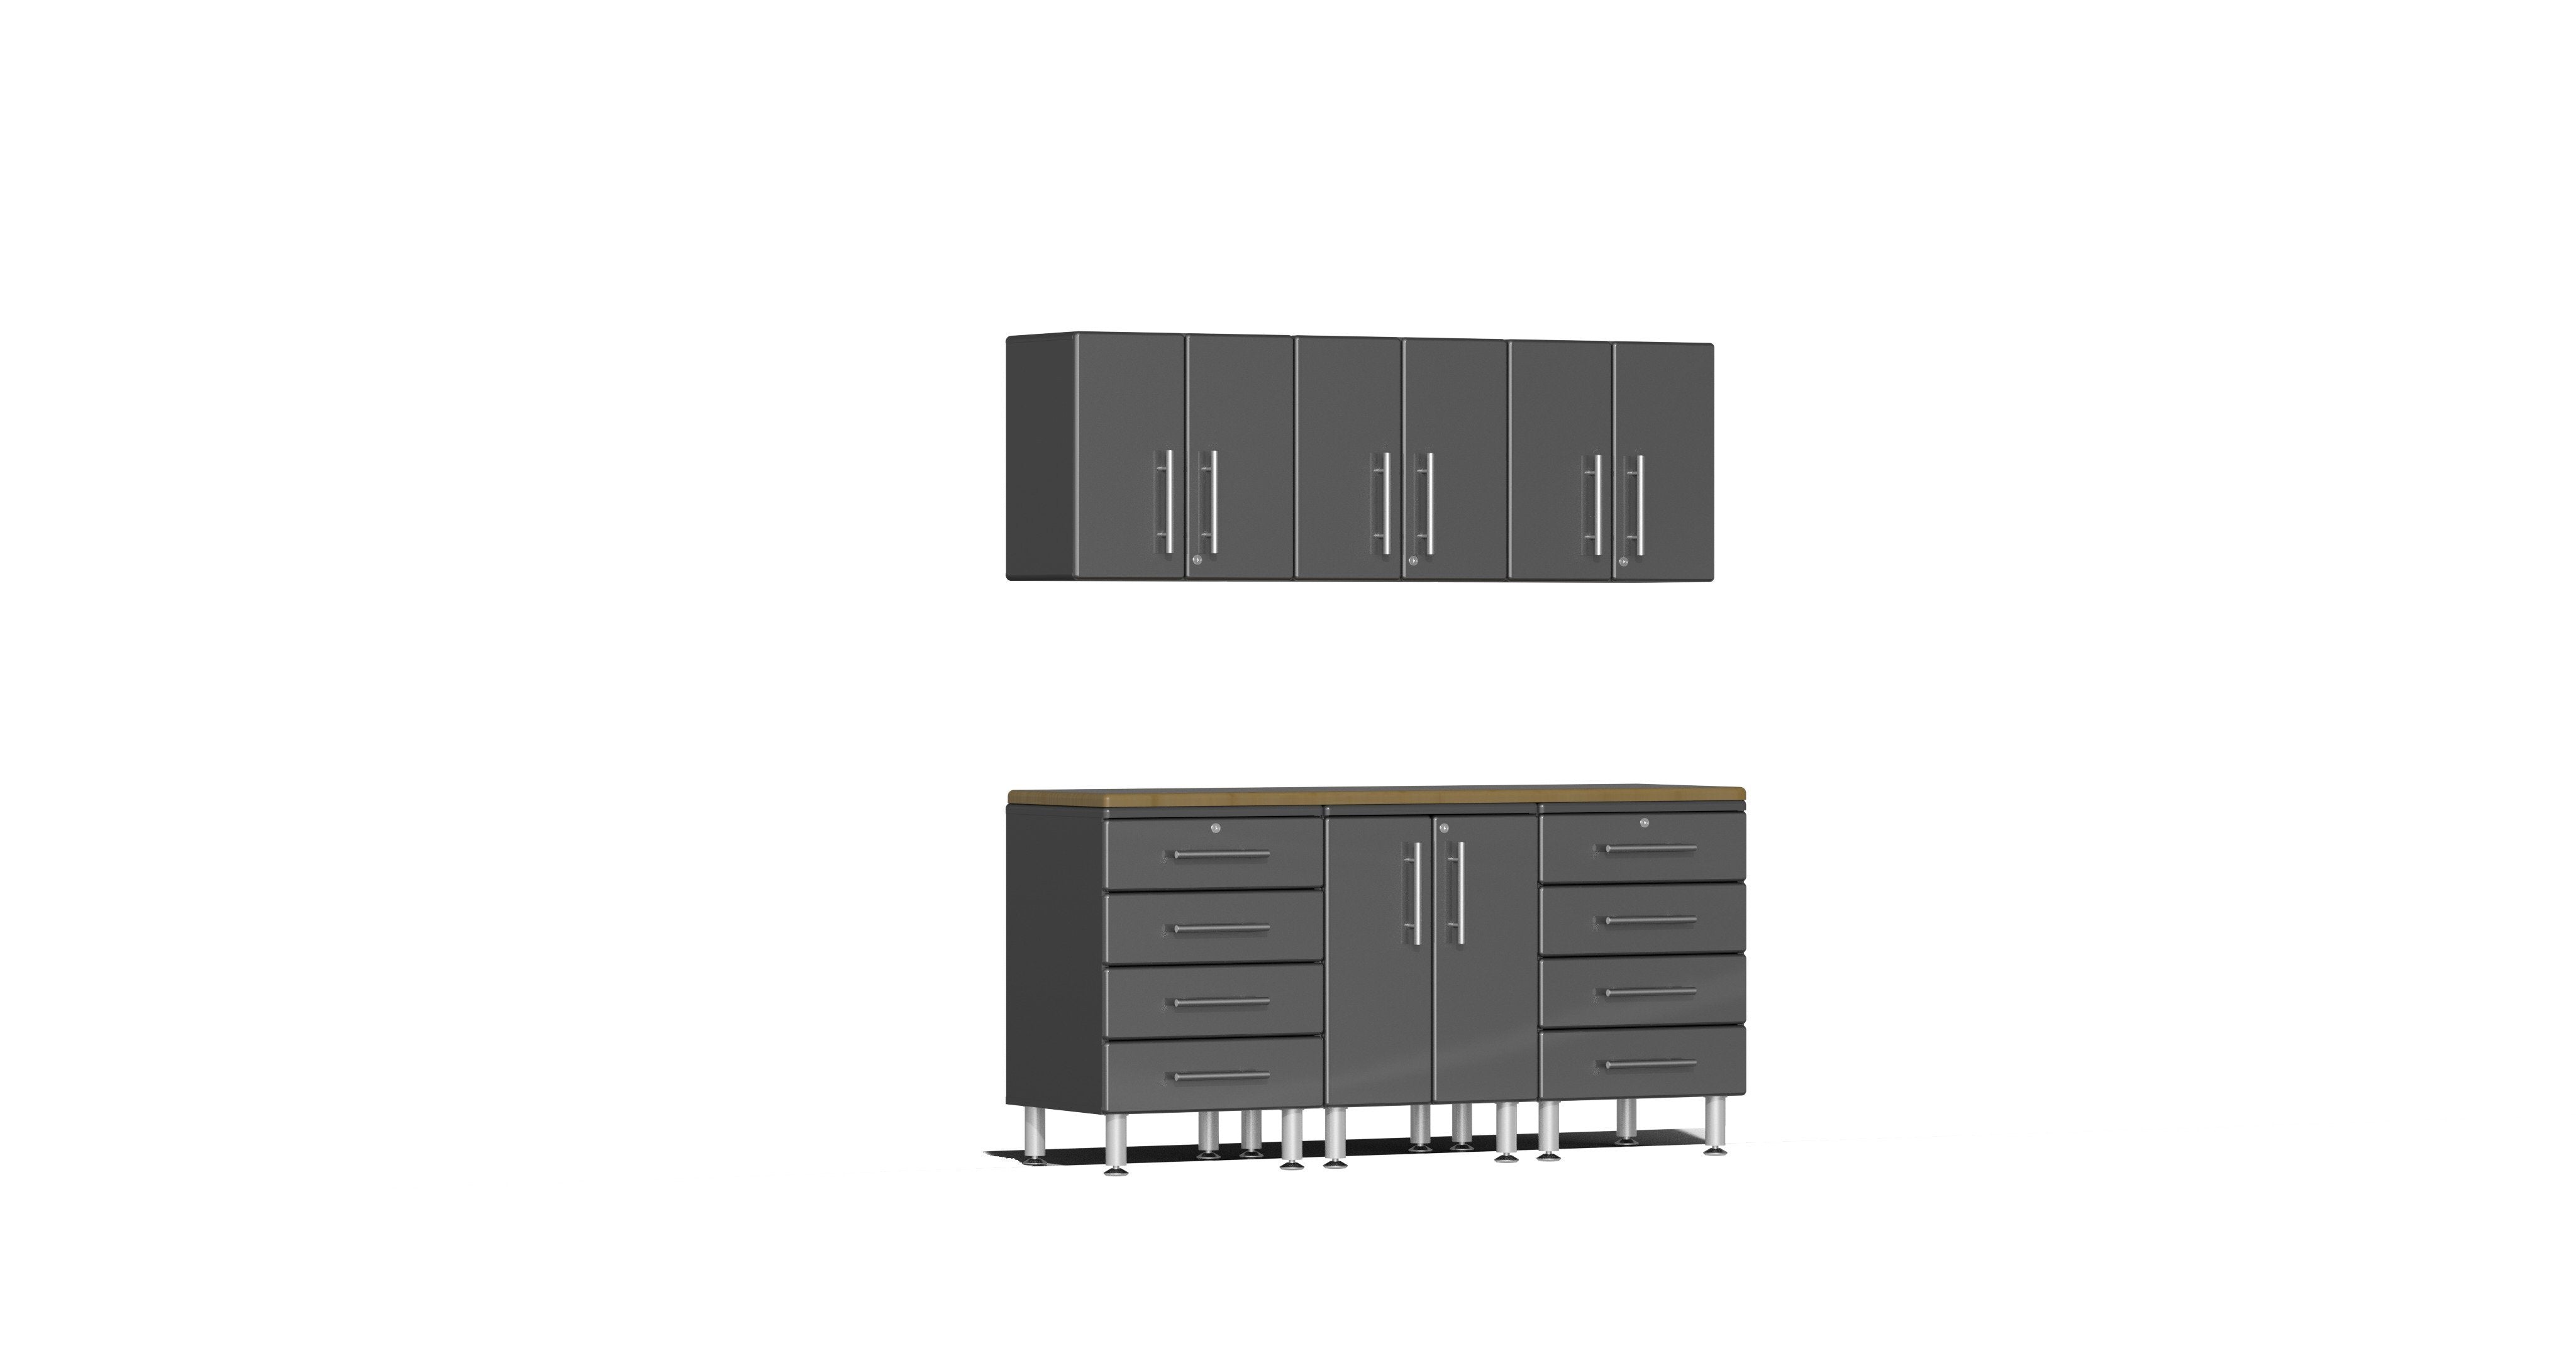 Kinbox 12 Pieces Metal Garage Furniture Locker Tool Cabinet for